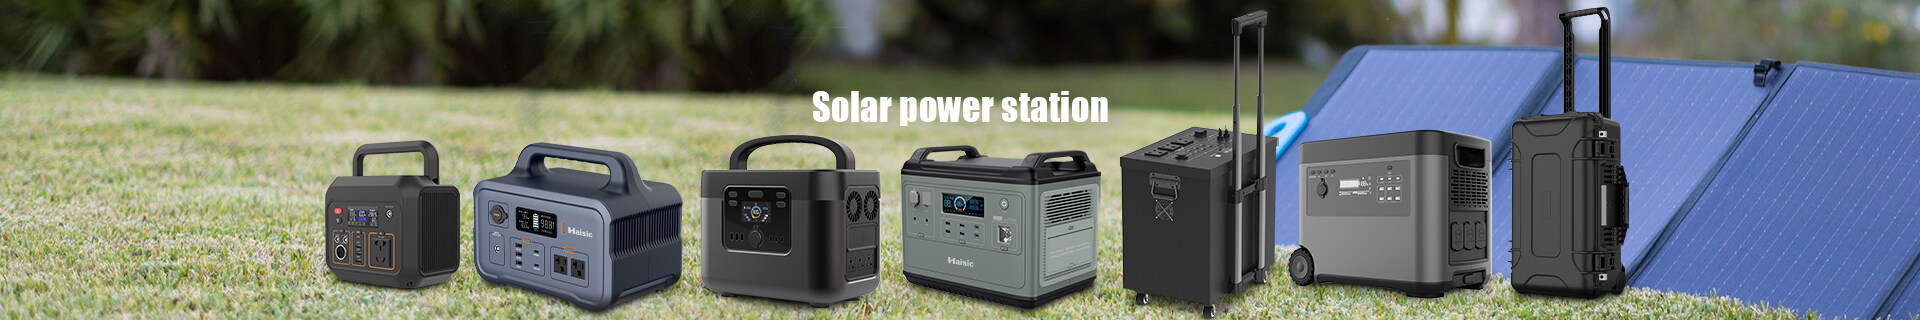 1000W portable power station,solar power station